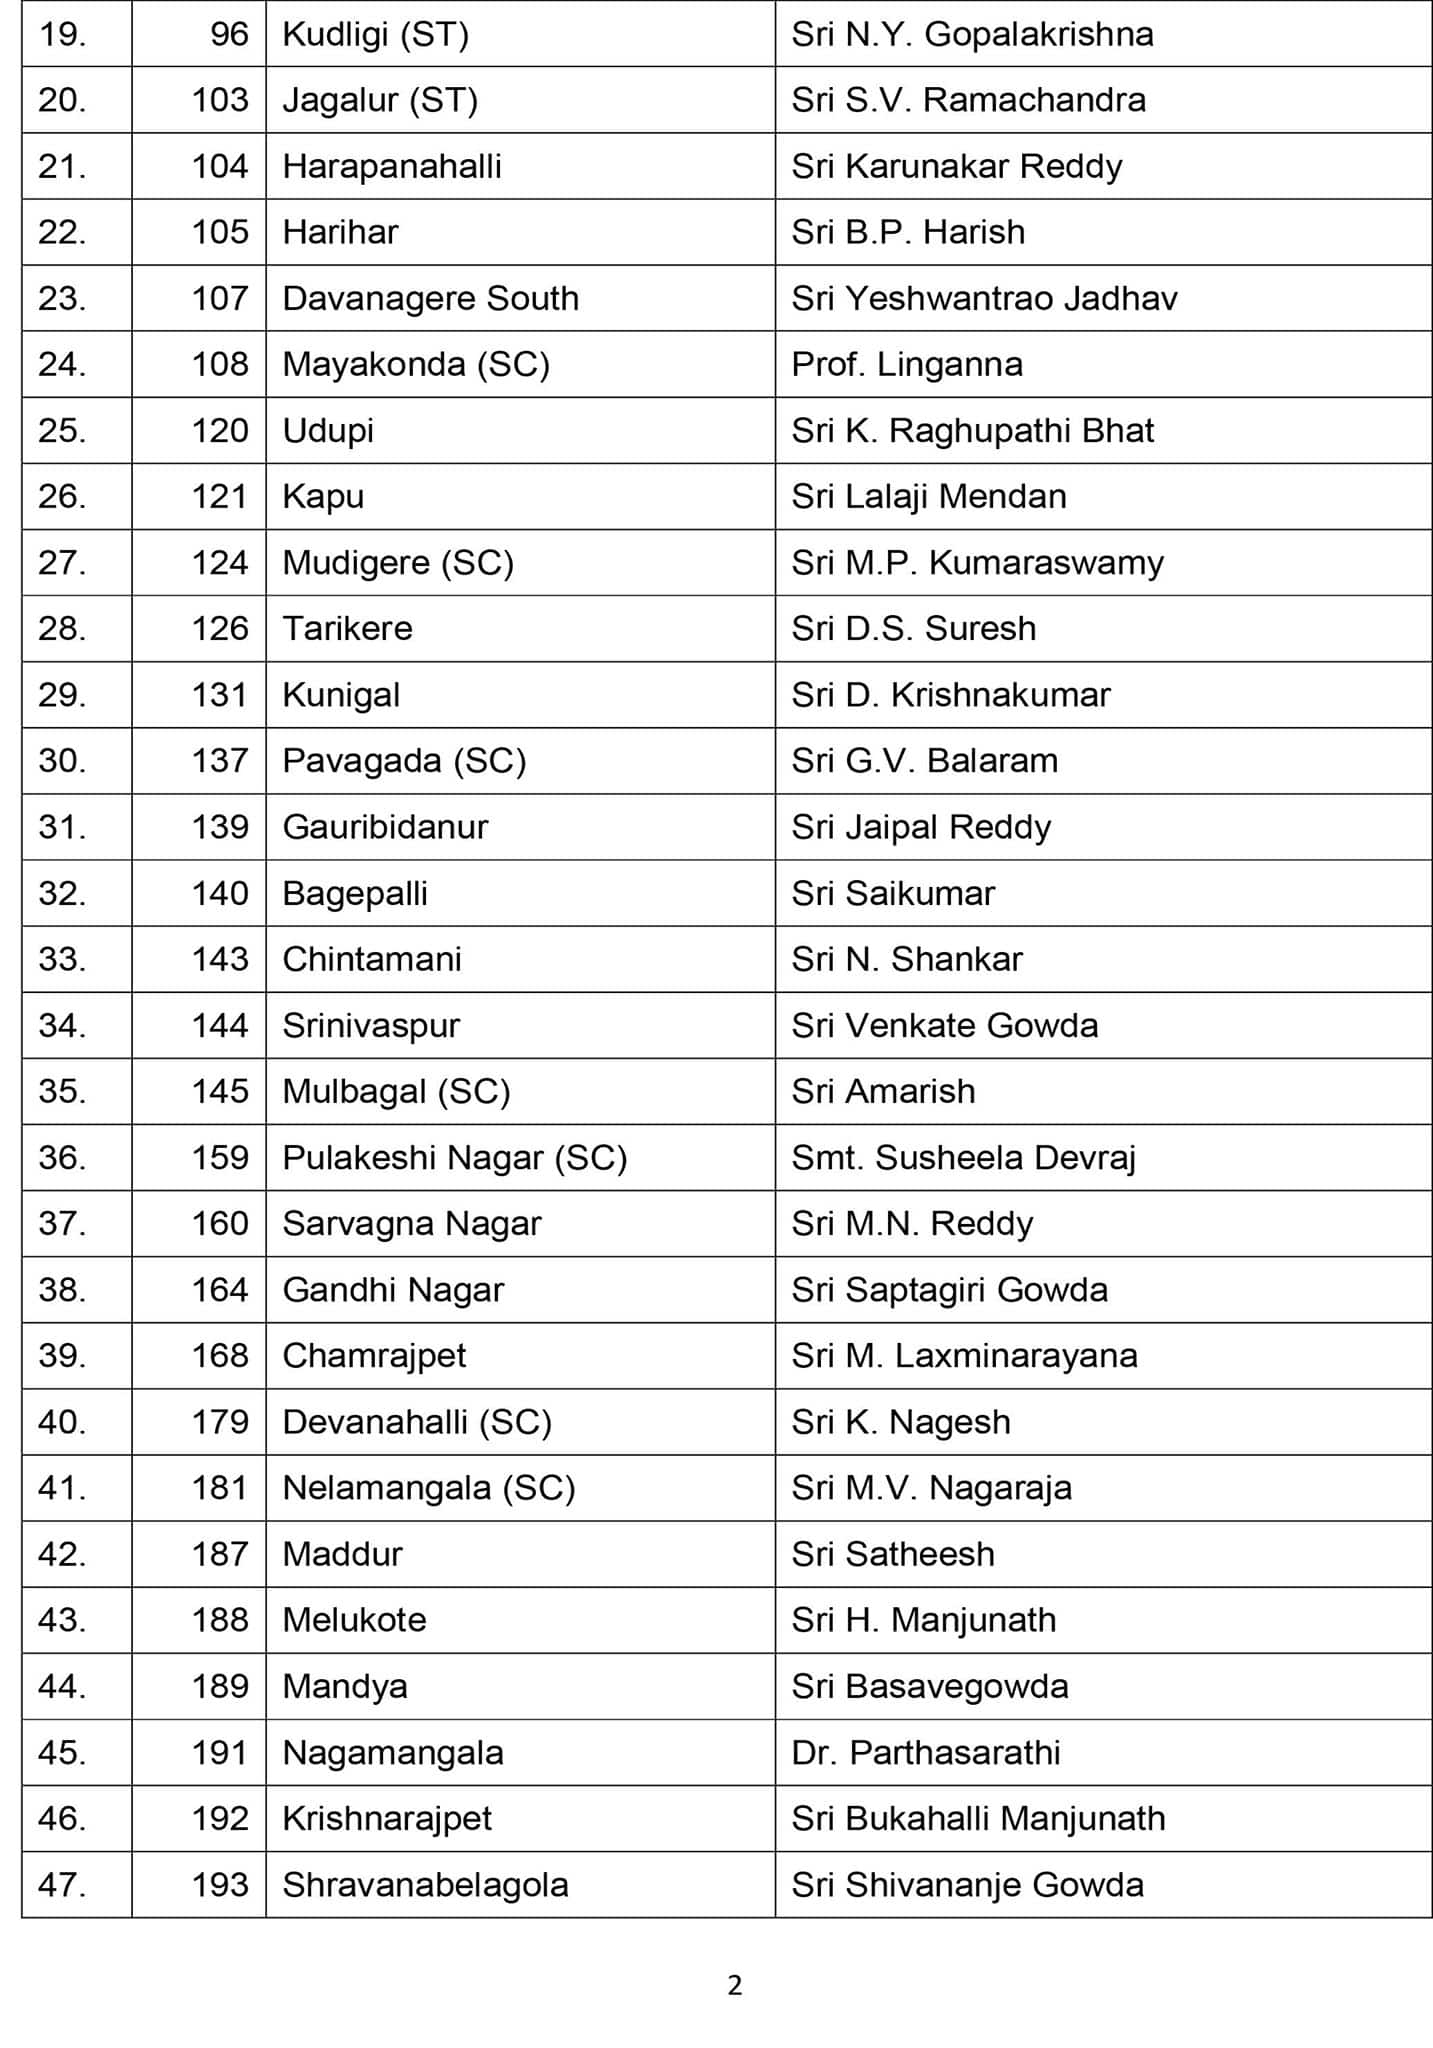 Karnataka Assembly Election 2018: BJP releases third list, 11 constituencies pending